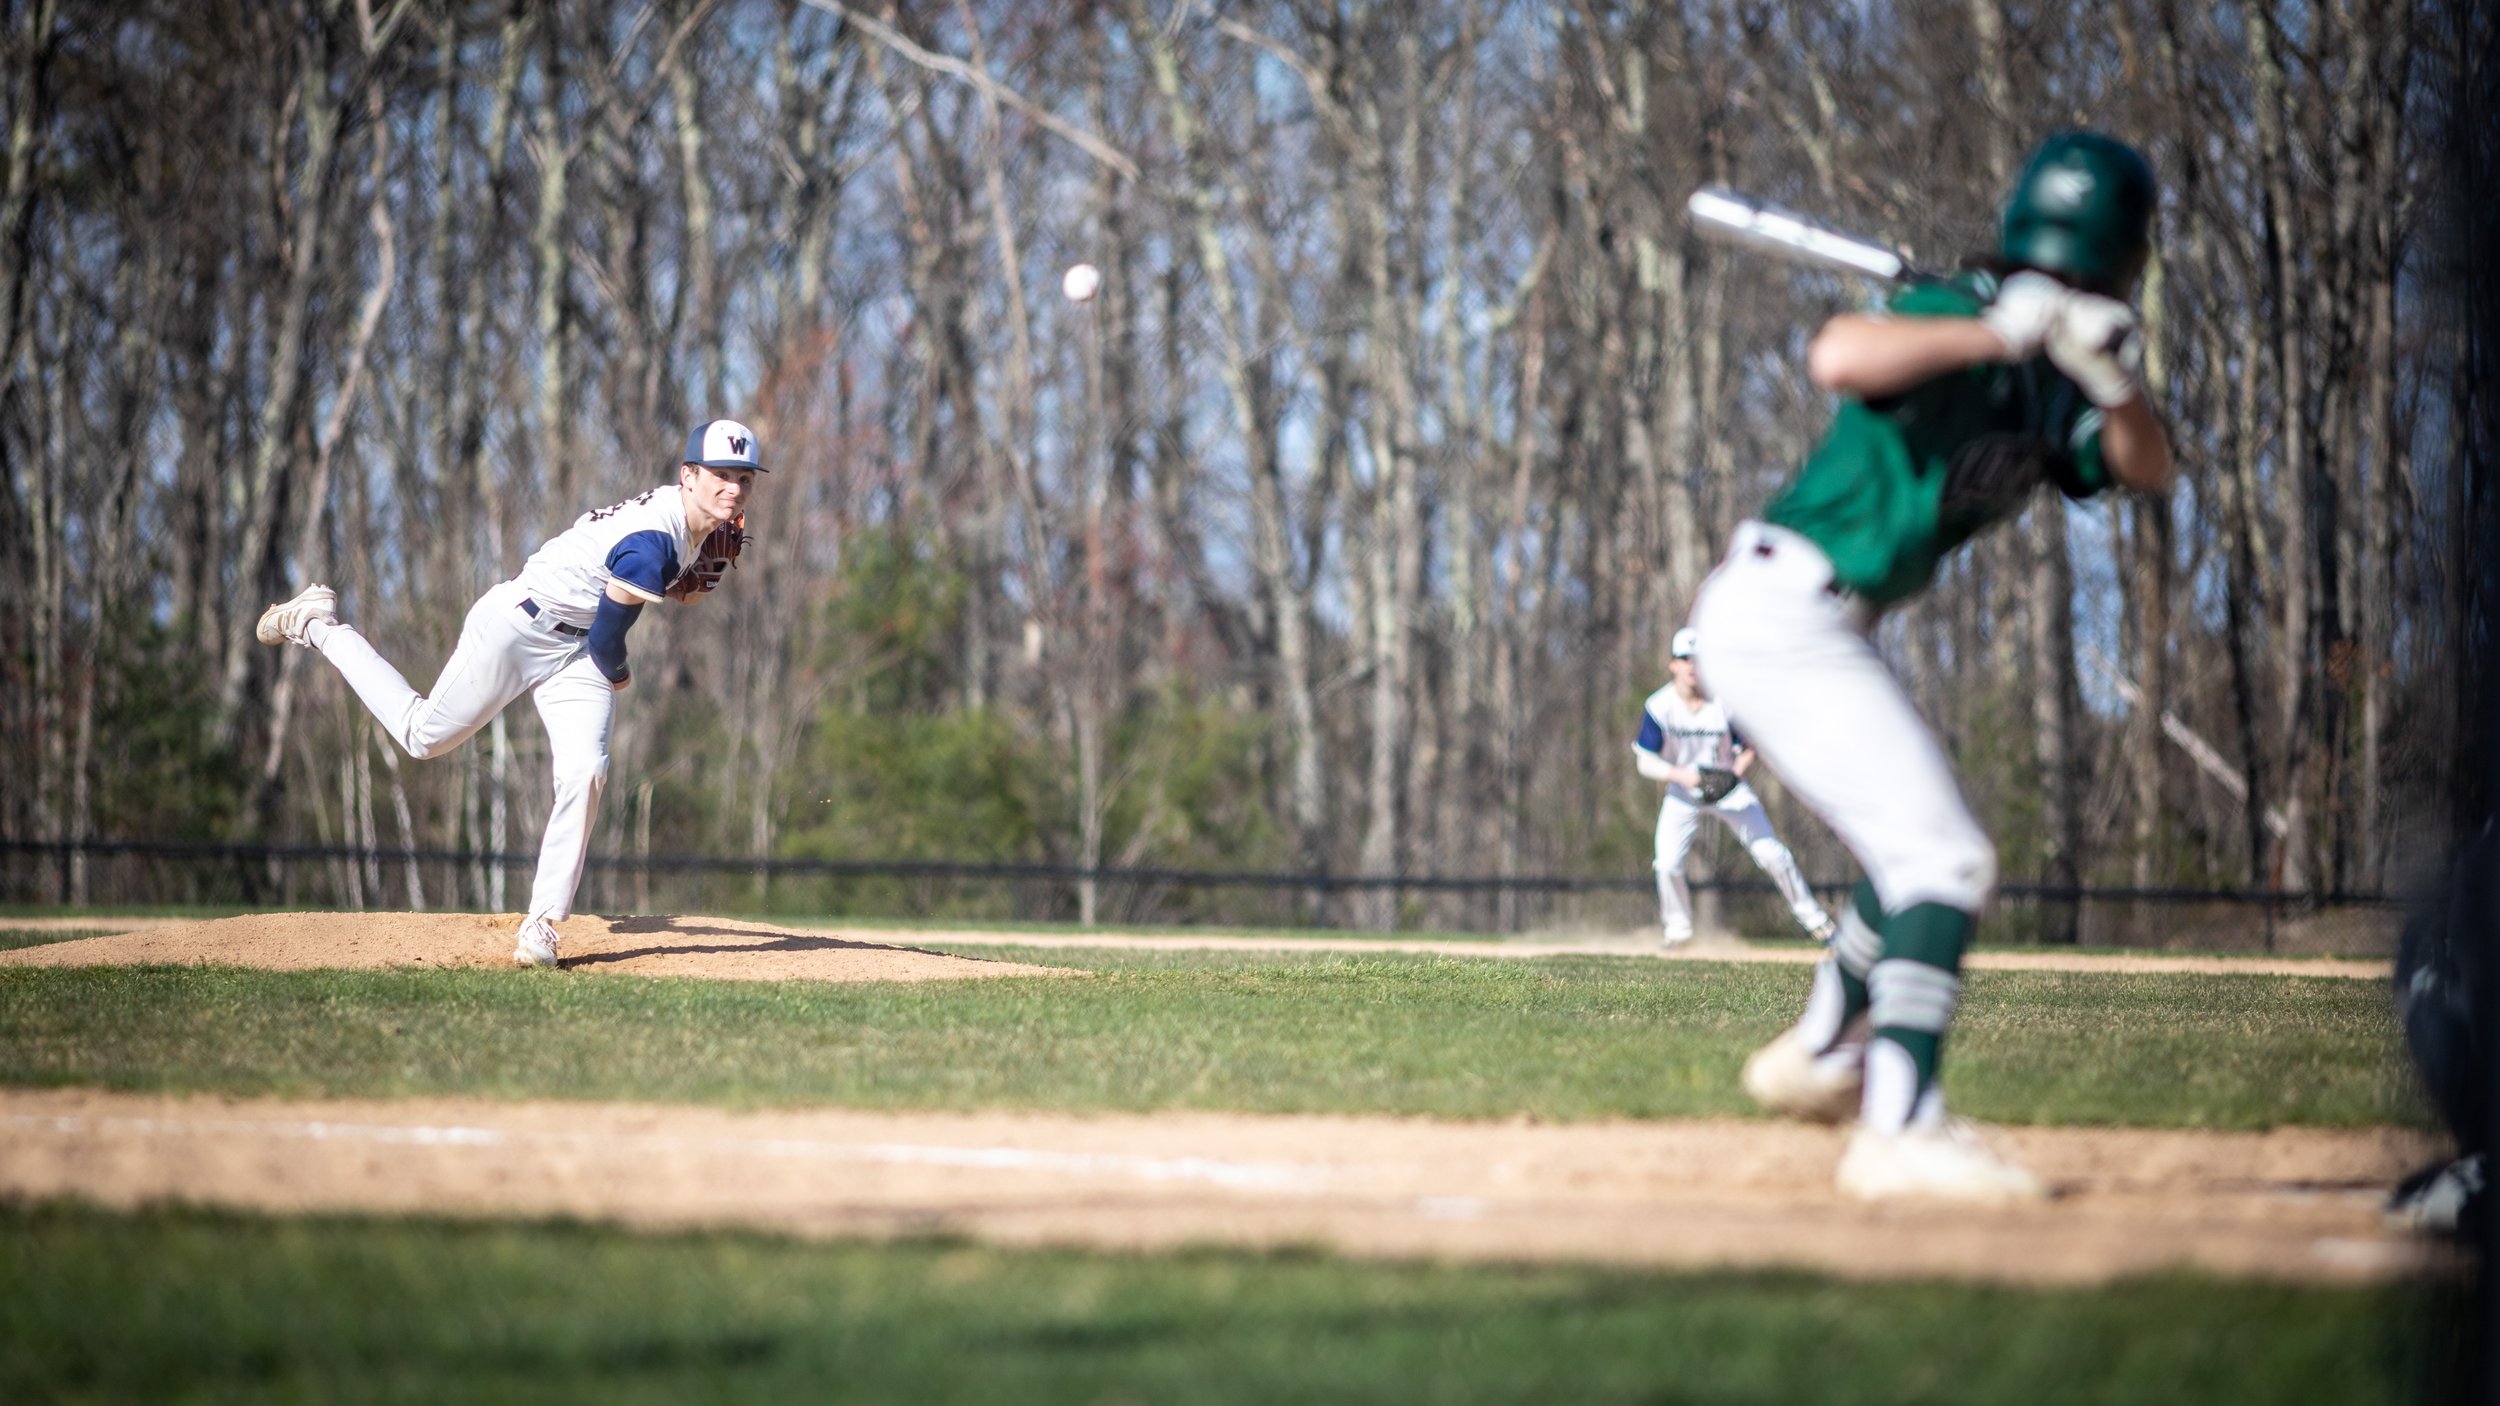 High school baseball game, Windham, N.H., April 2022